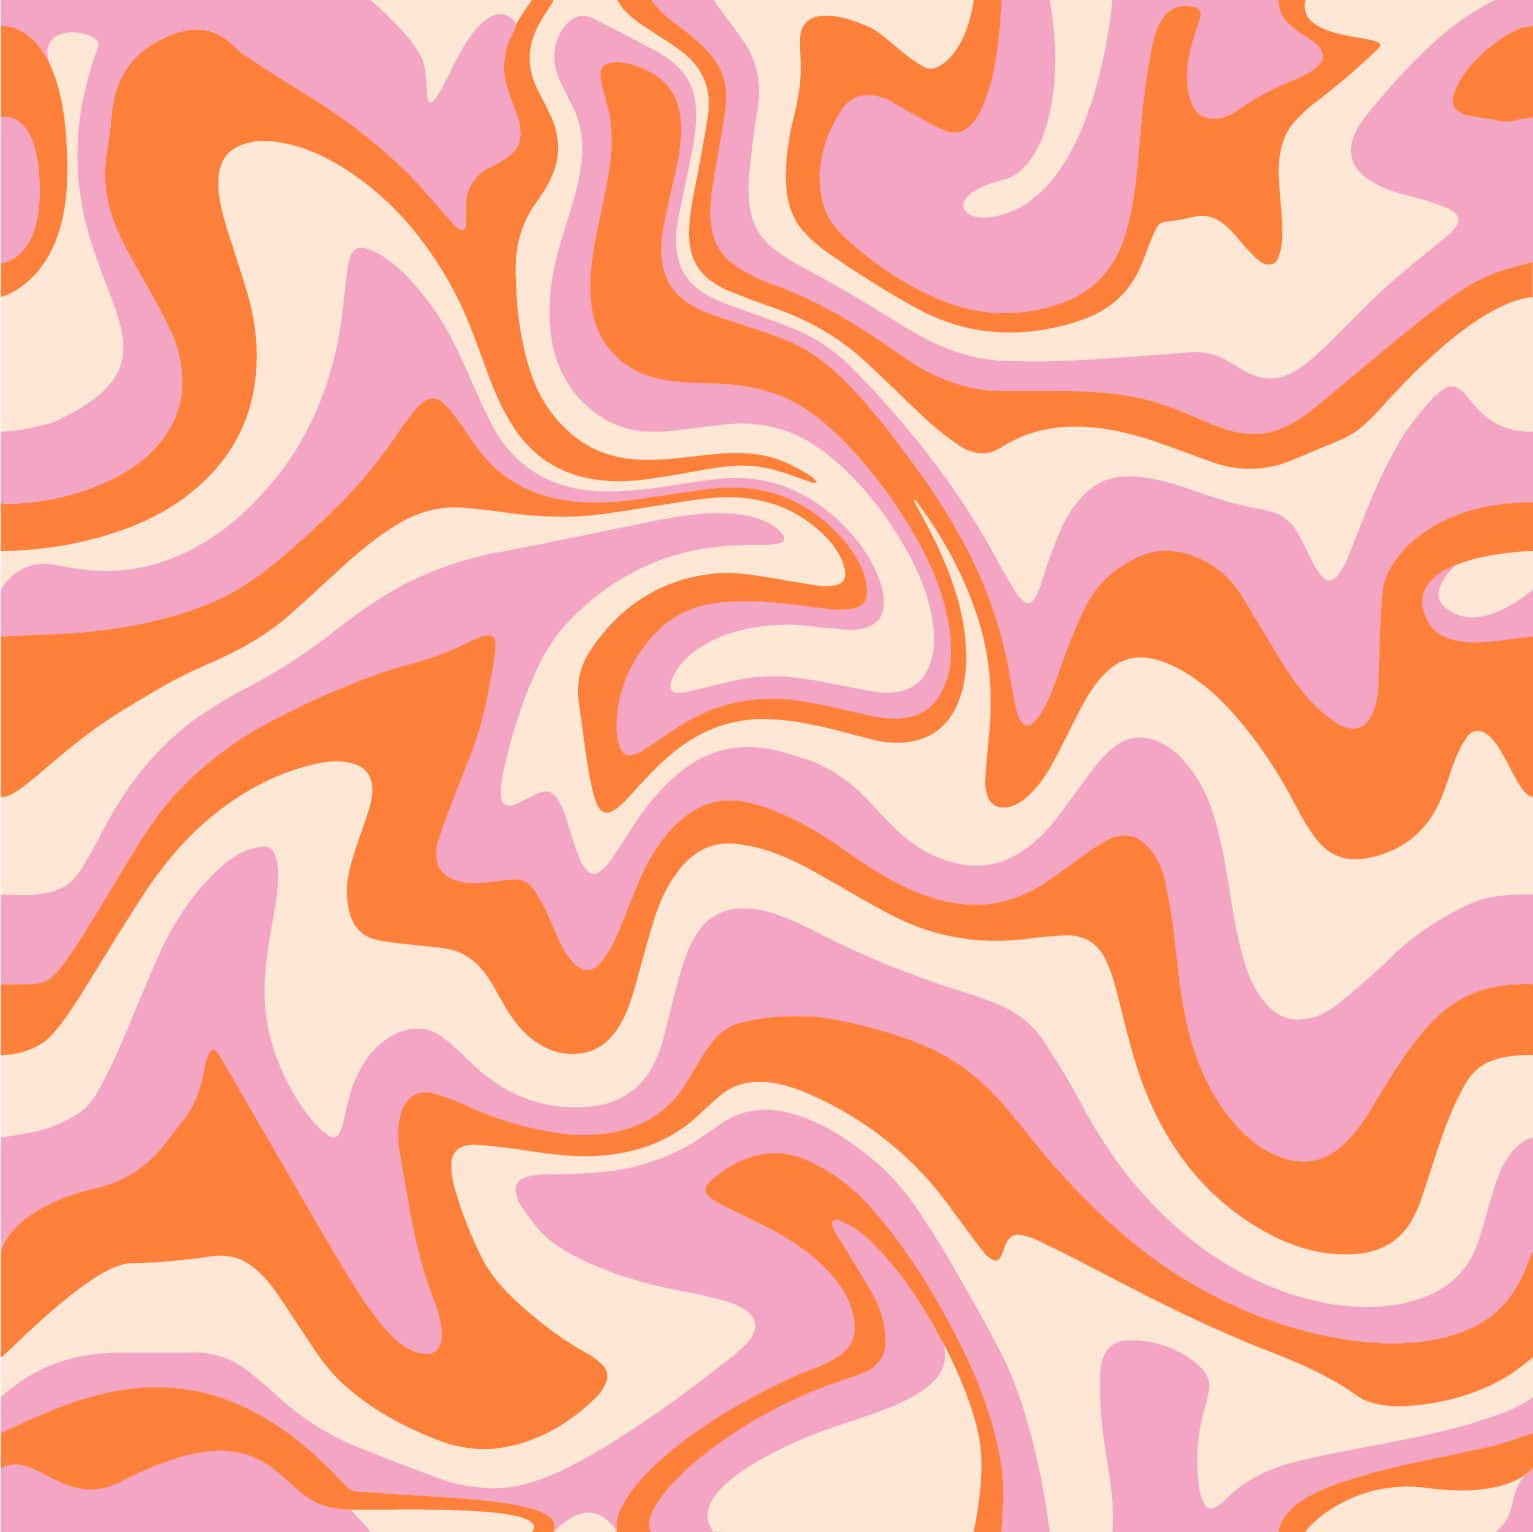 Download Cute Liquid Wavy Swirl Patterns Background | Wallpapers.com